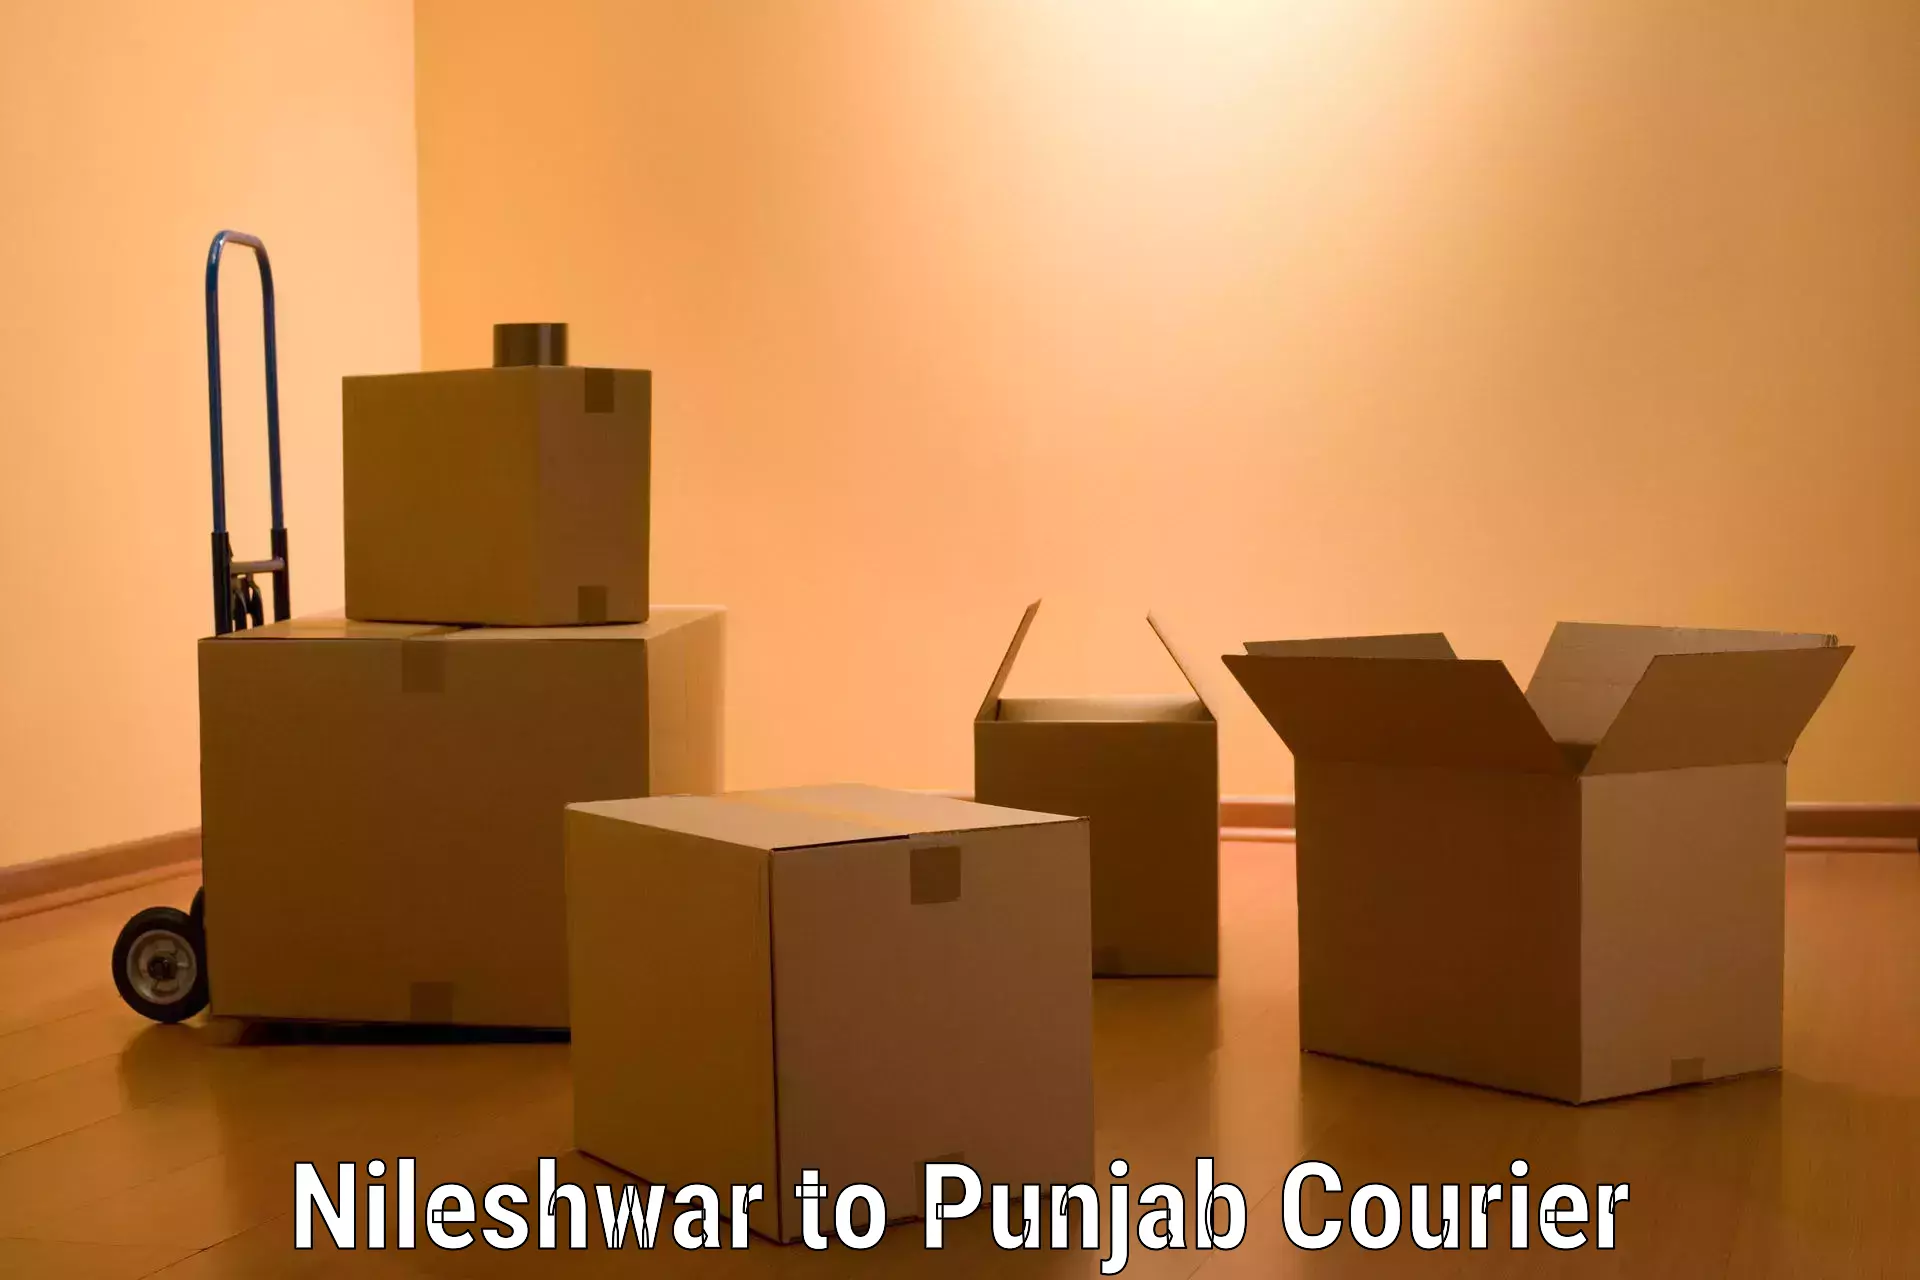 Professional moving company Nileshwar to Punjab